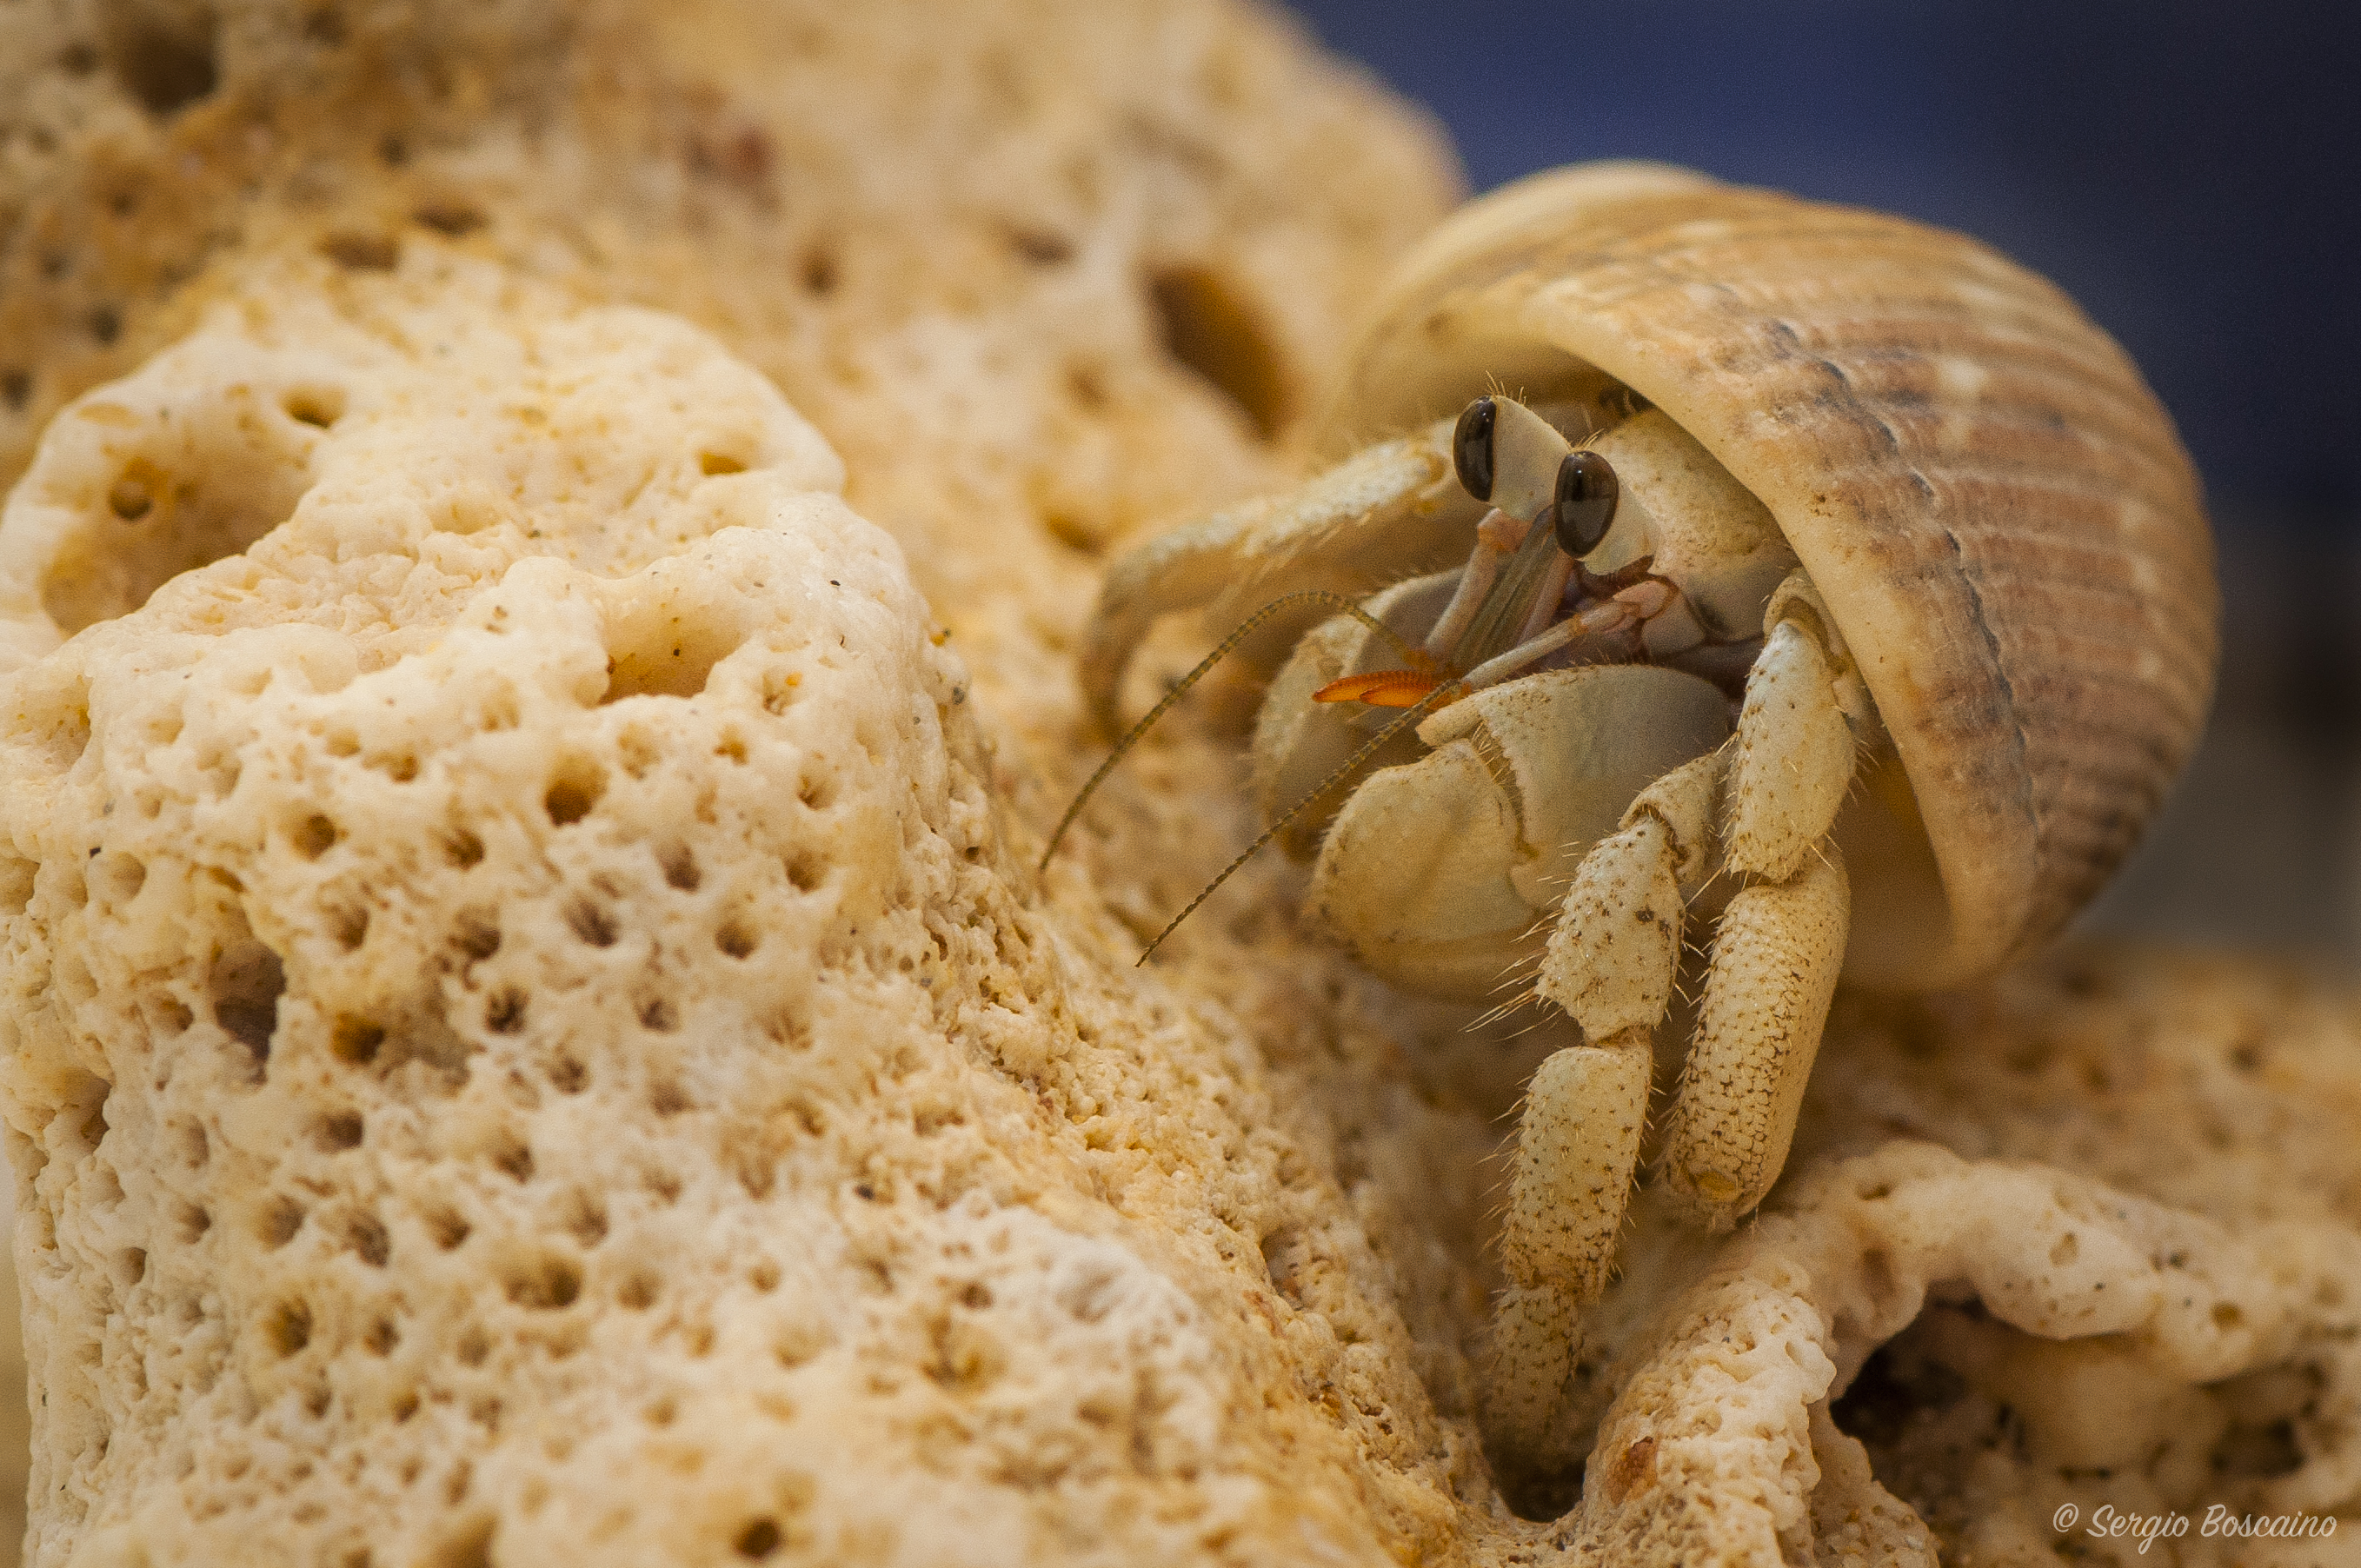 Meet the hermit crab